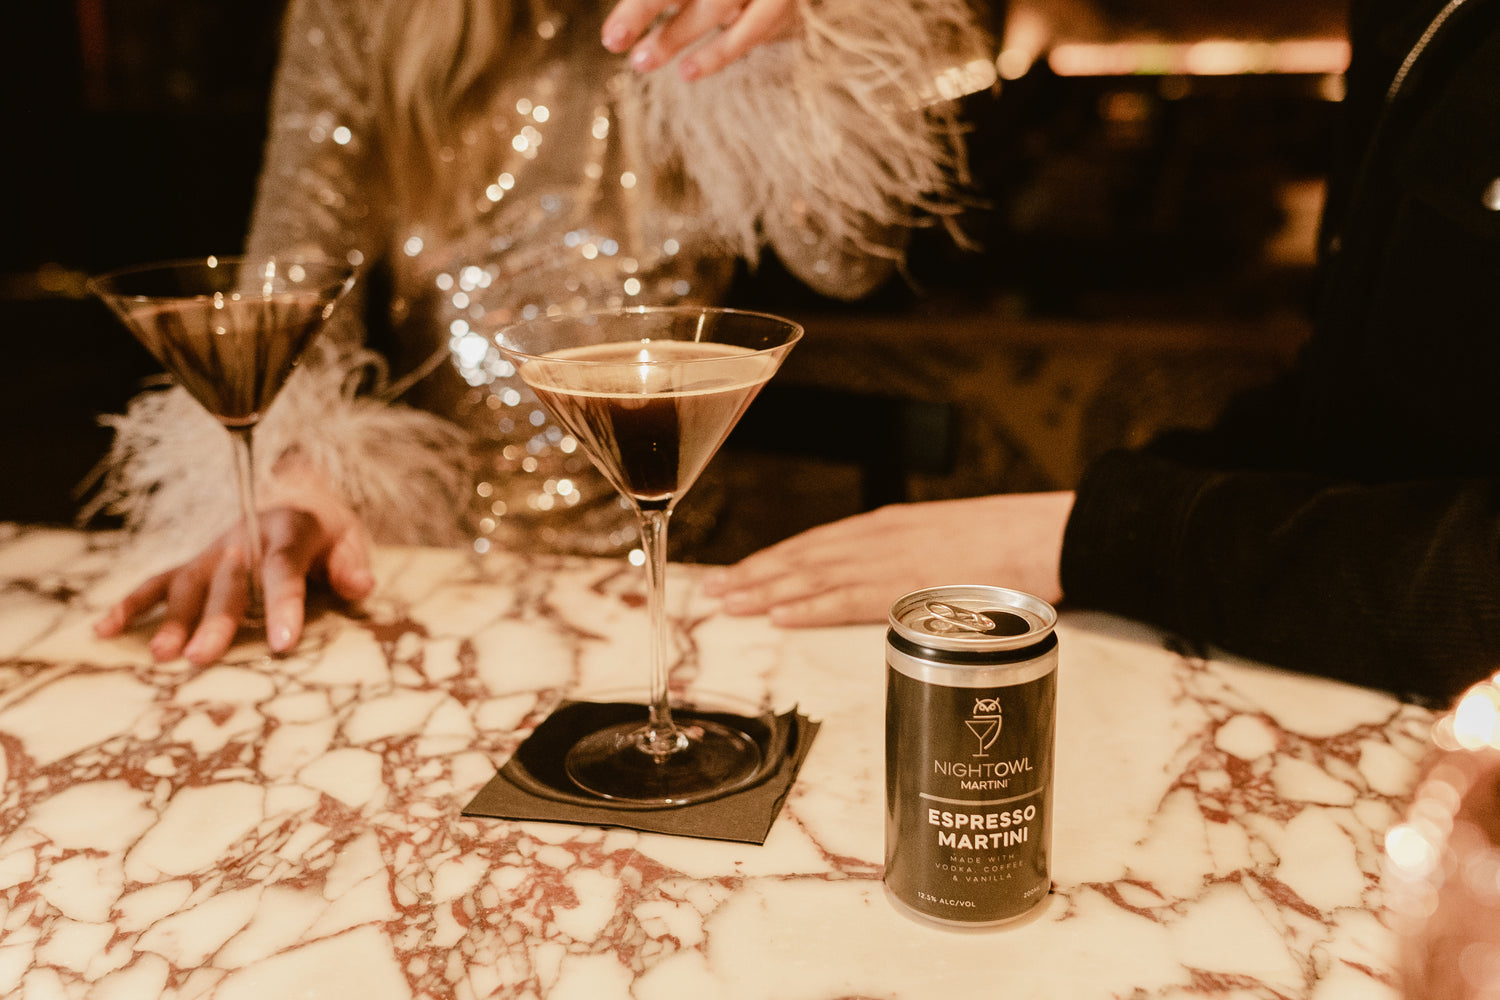 Fancy woman drinking a NightOwl espresso martini from a martini glass